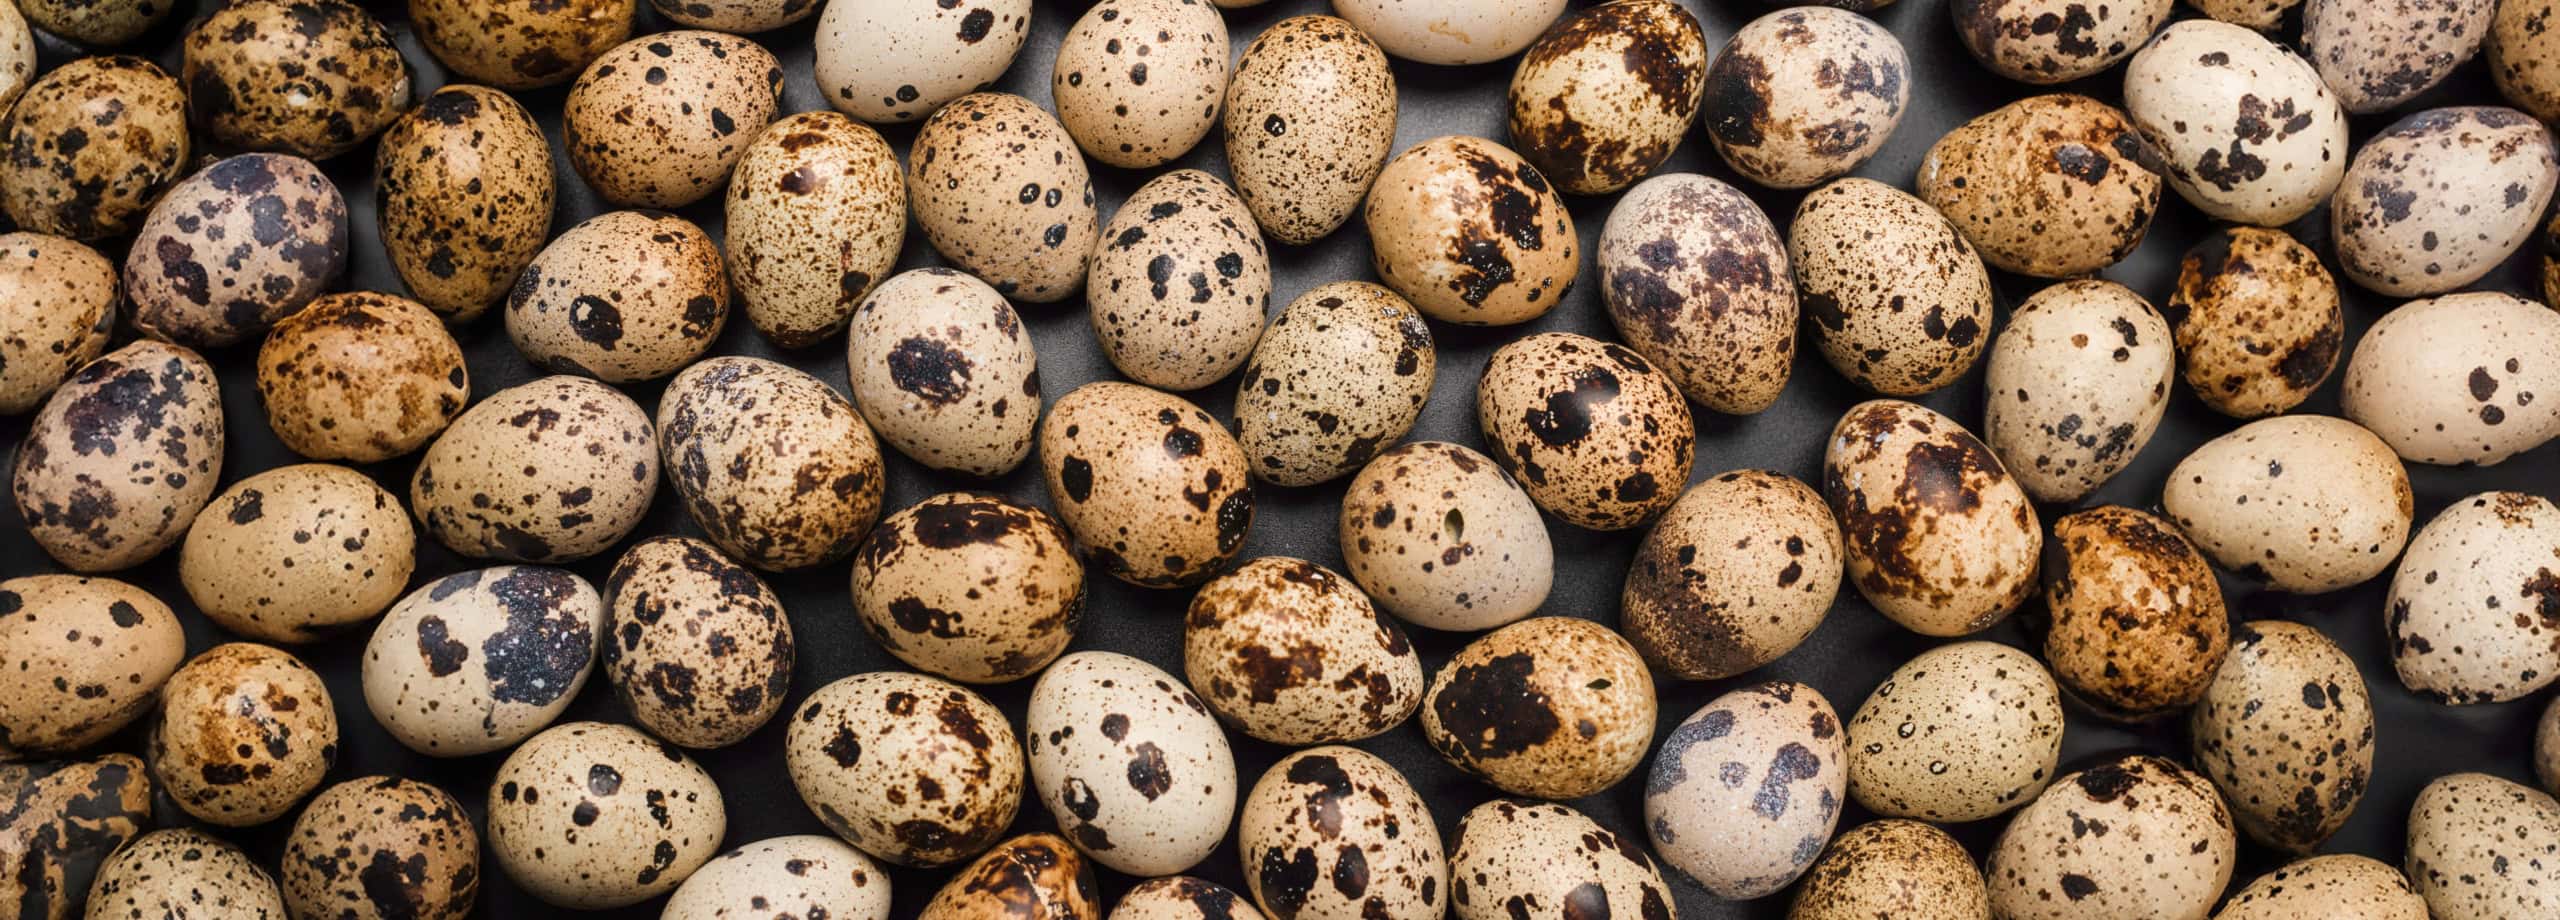 Eggs-Unlimited-Specialty-eggs-bulk-wholesale-Quail-Eggs-Duck-Eggs-Blue-heirloom-eggs-top-scaled